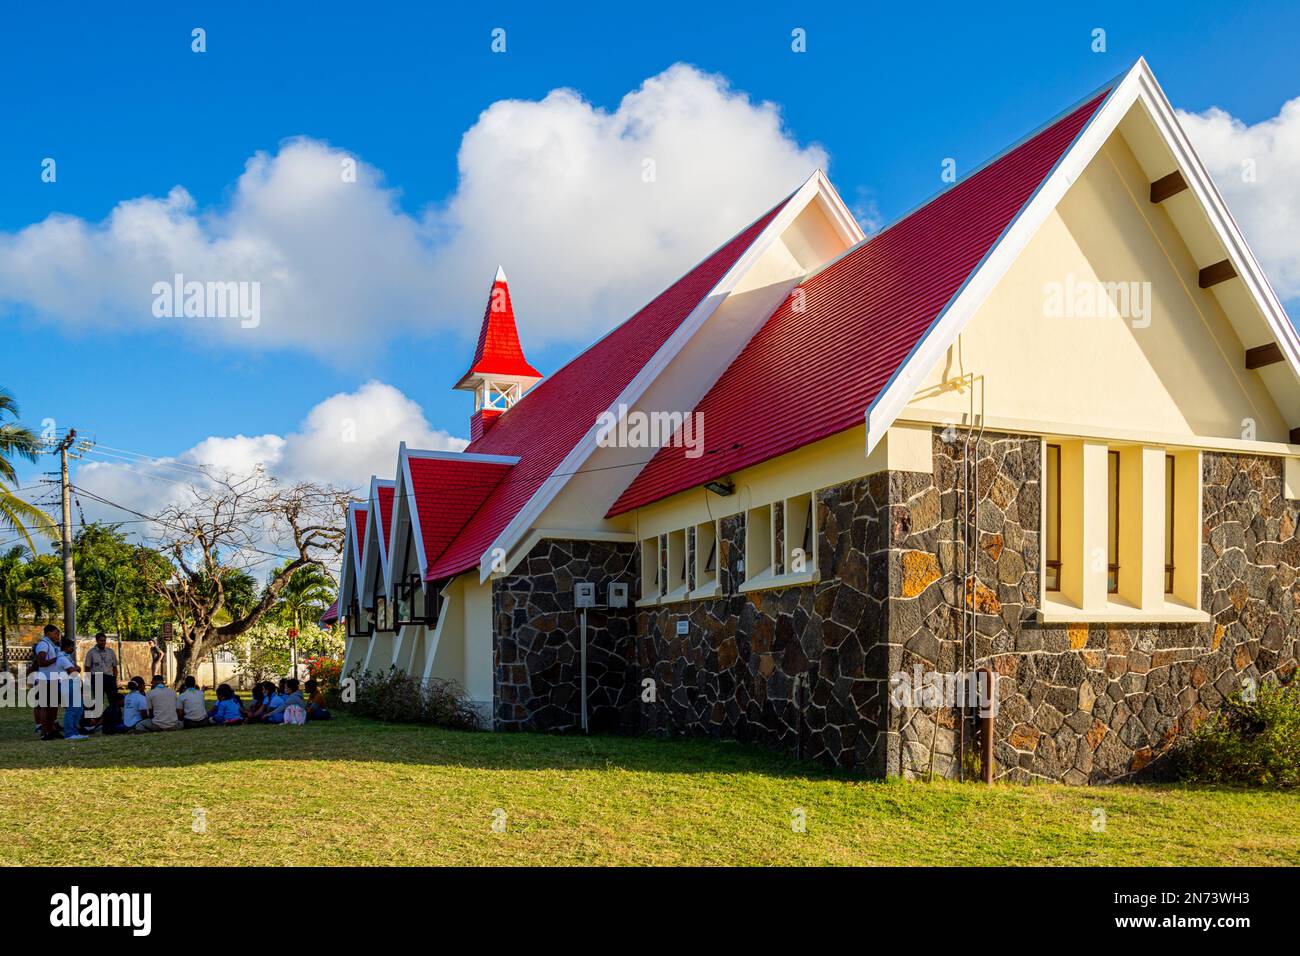 Notre Dame Auxiliatrice Kirche mit markantem roten Dach am Cap Malheureux, Mauritius Island, Indischer Ozean Stockfoto